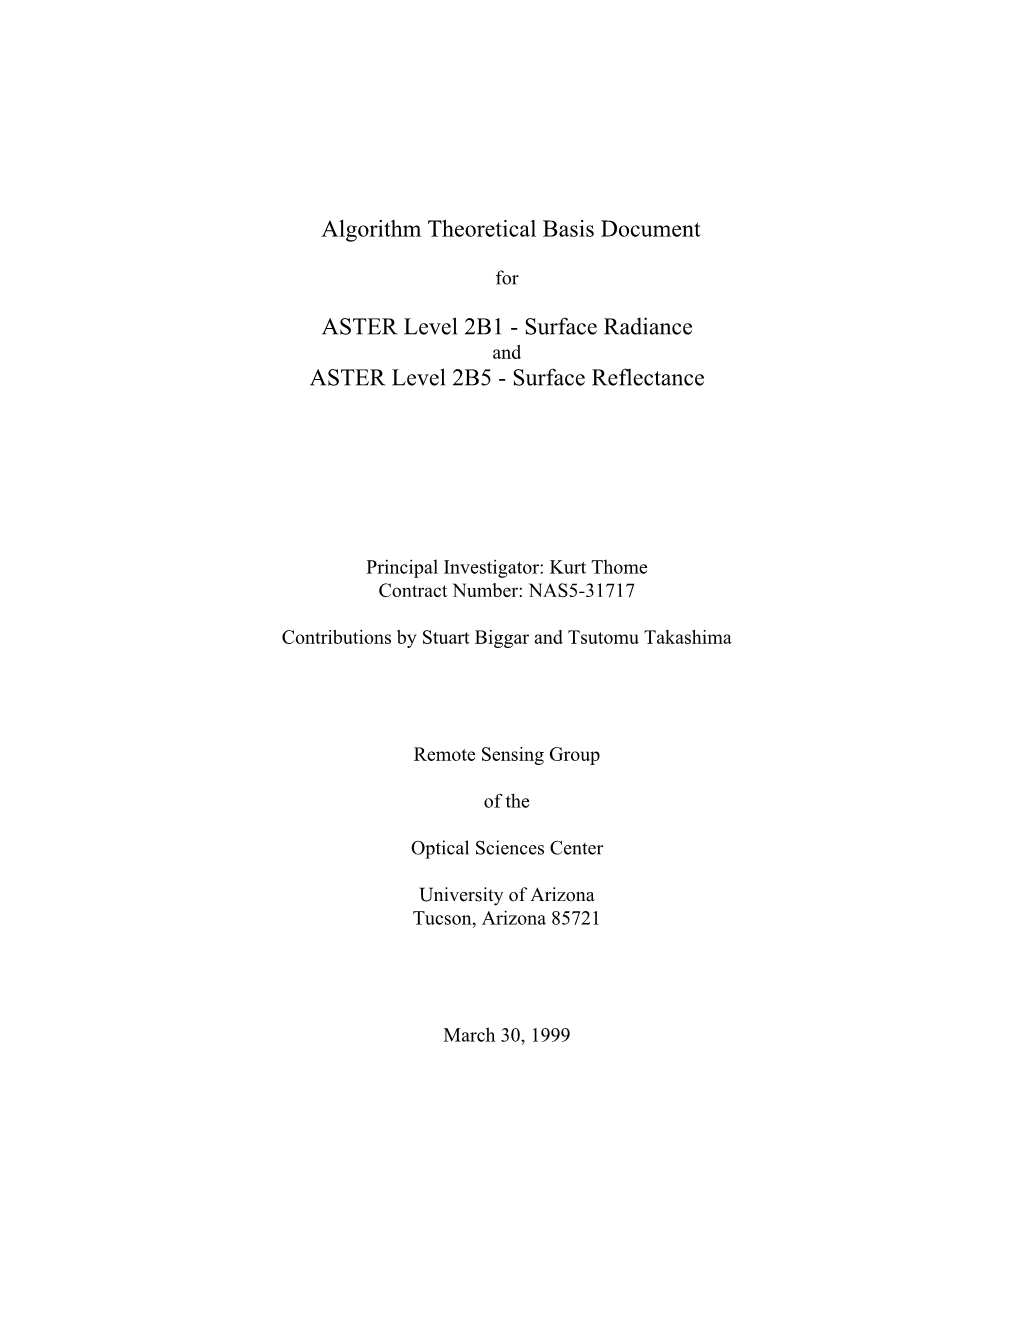 Algorithm Theoretical Basis Document ASTER Level